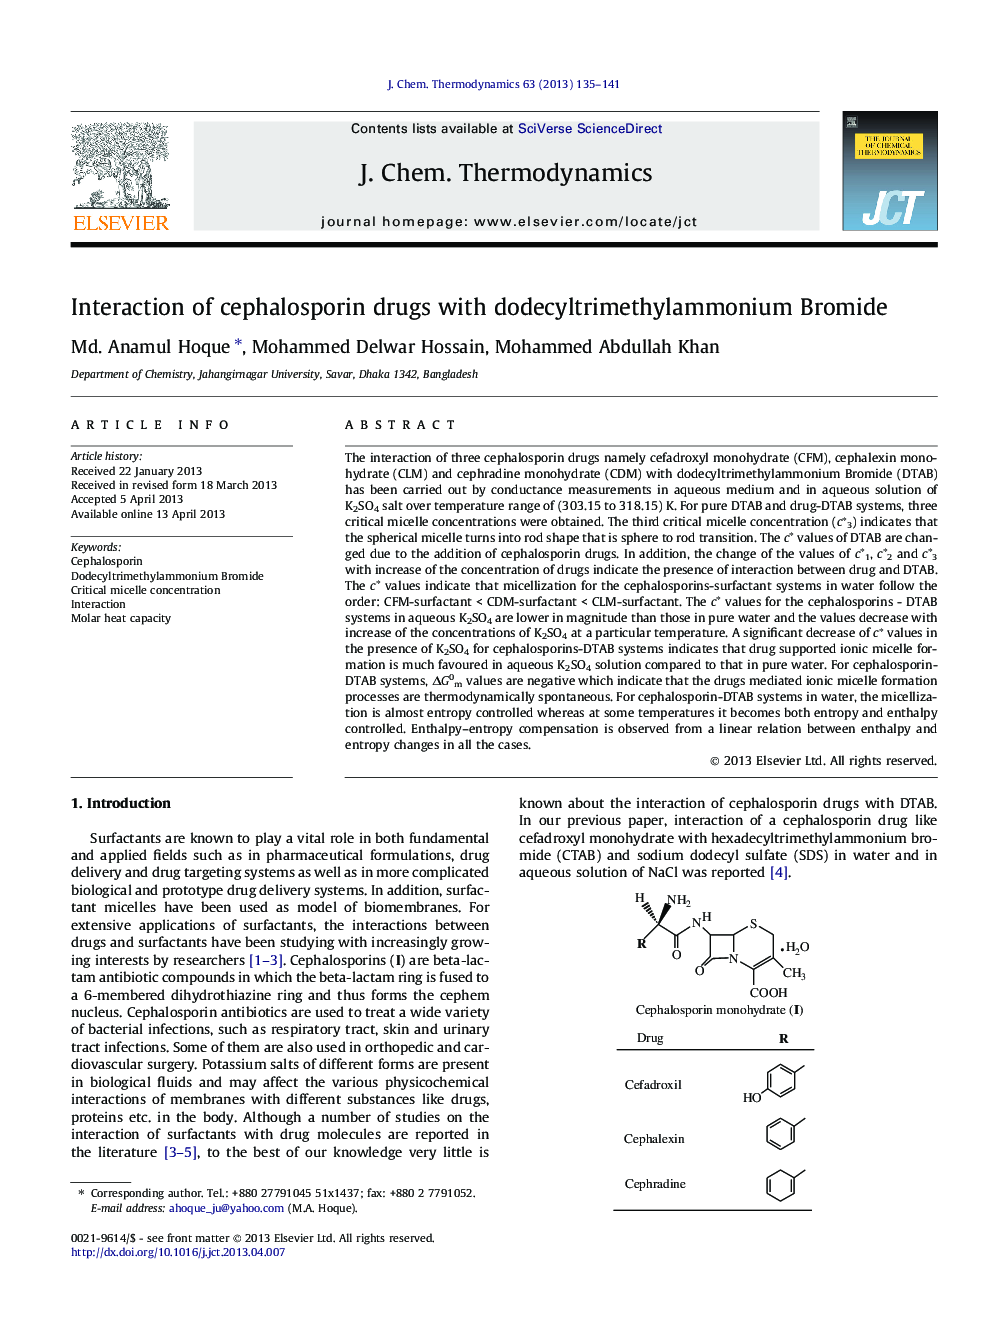 Interaction of cephalosporin drugs with dodecyltrimethylammonium Bromide